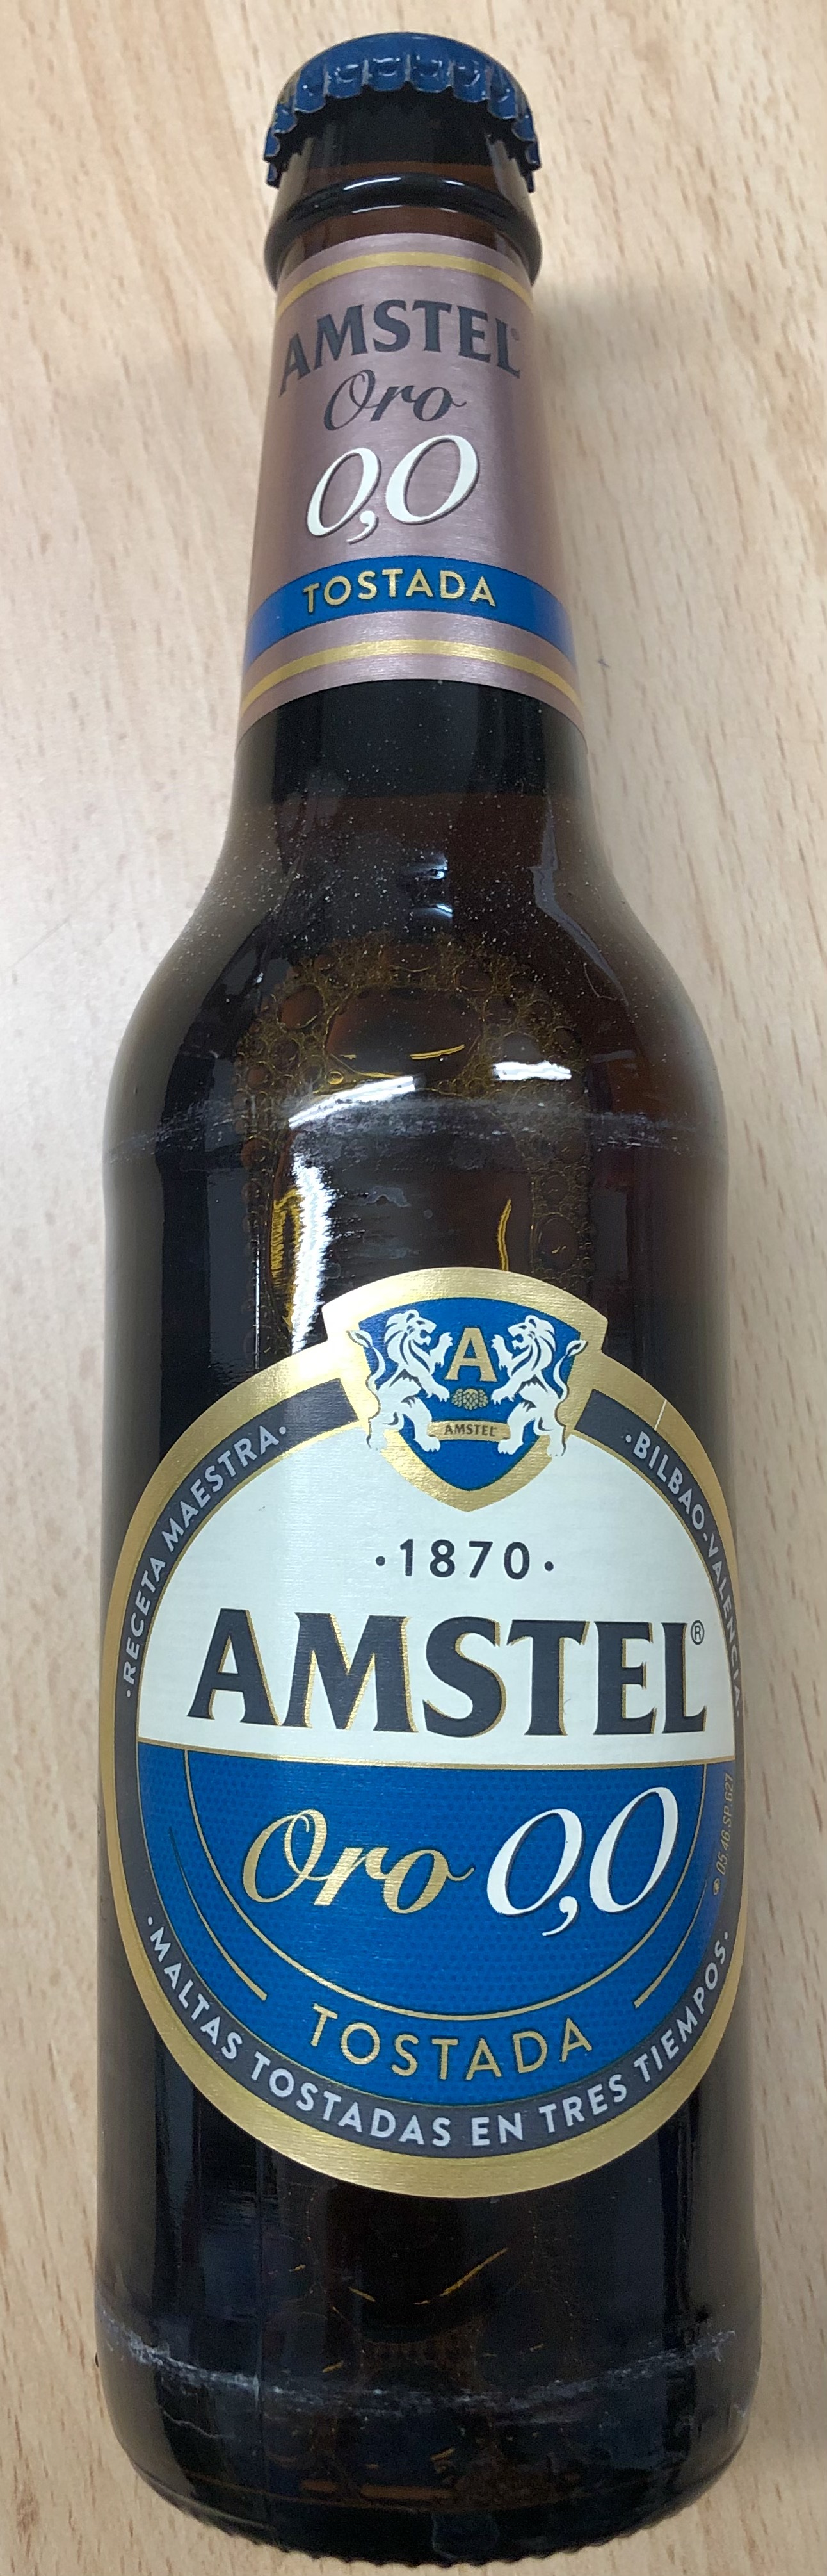 Torrada amstel gold 0.0